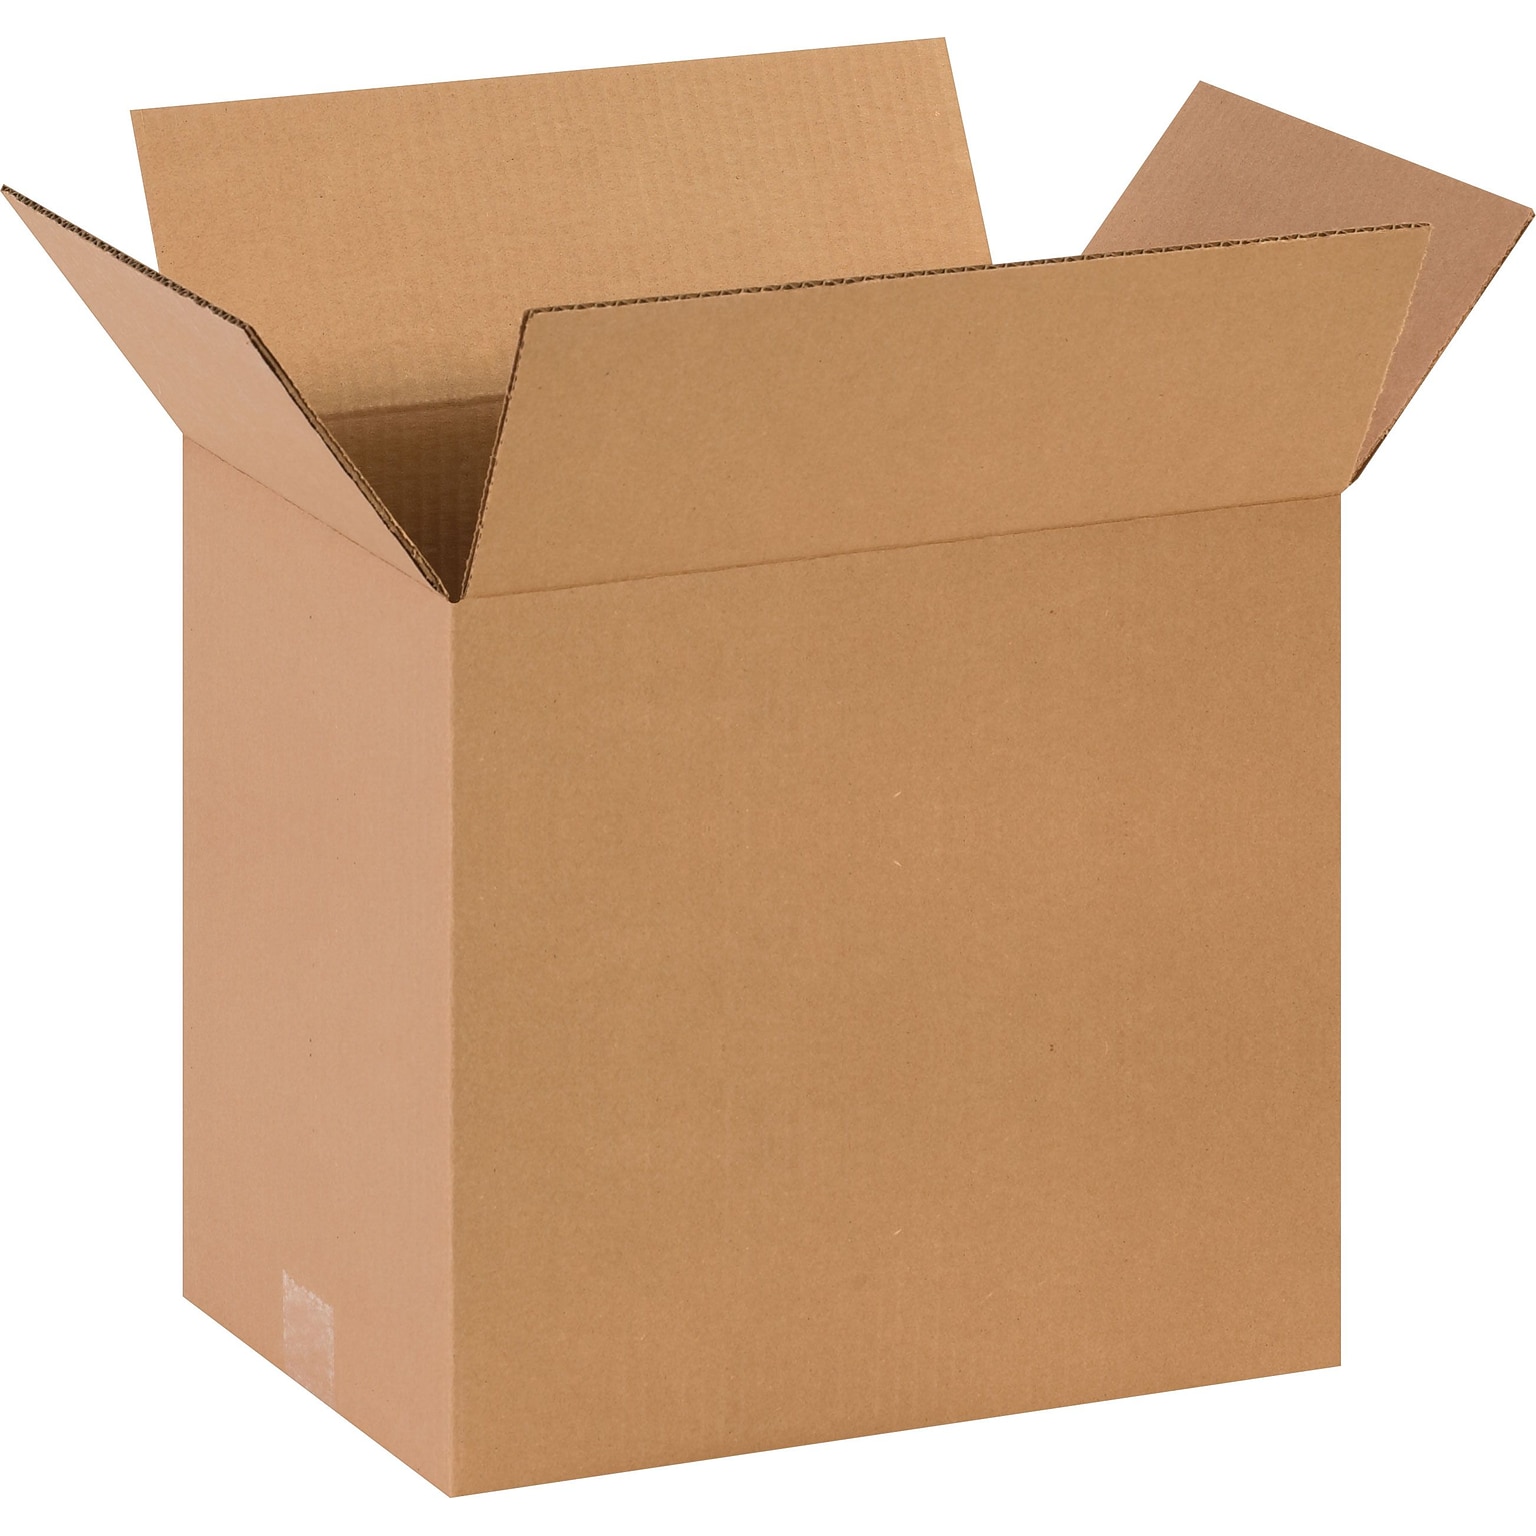 14 x 10 x 12 Shipping Boxes, 32 ECT, Brown, 25/Bundle (141012)